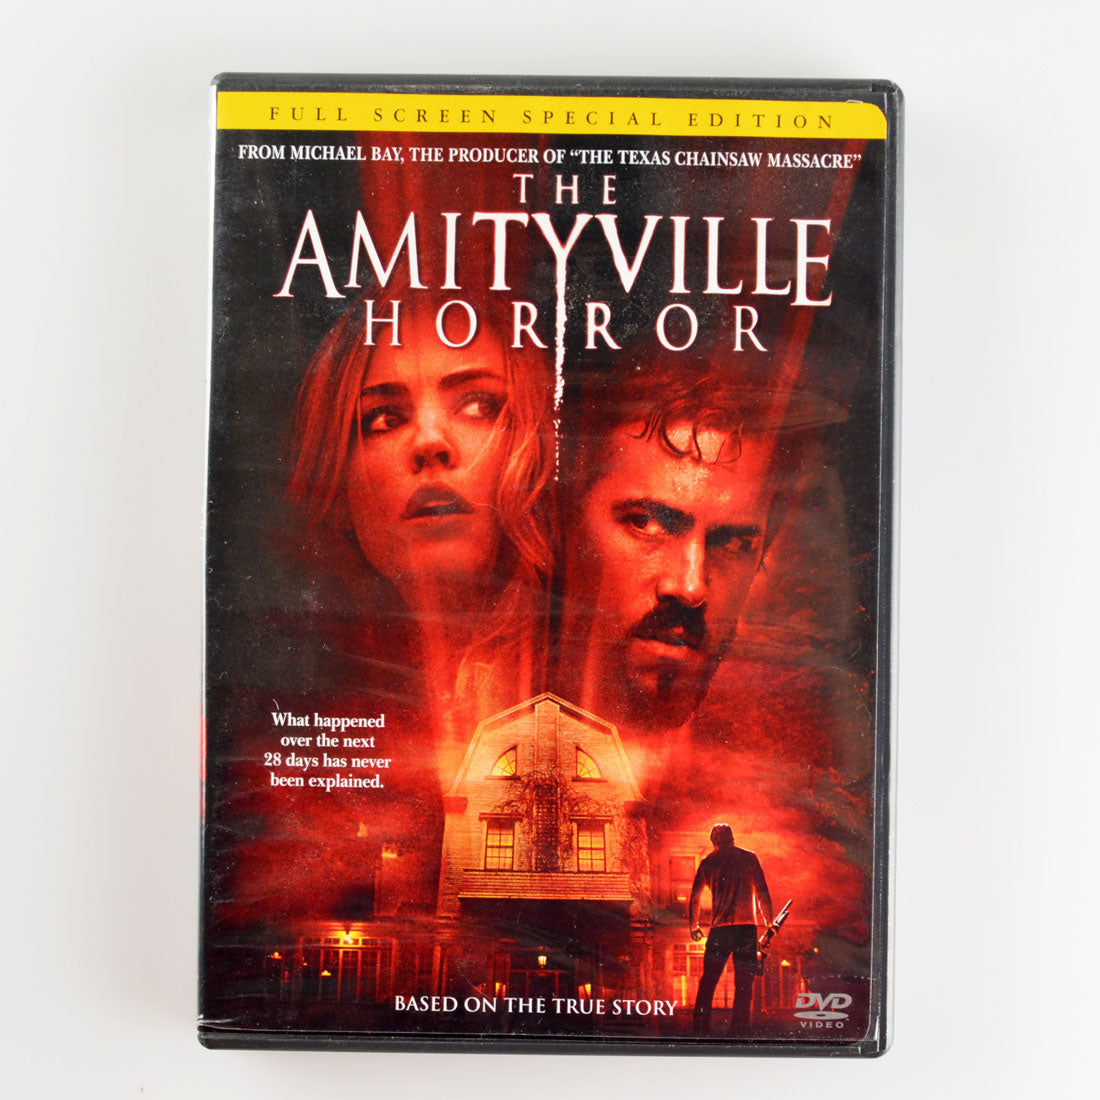 The Amityville Horror (DVD, 2005) Ryan Reynolds, Melissa George